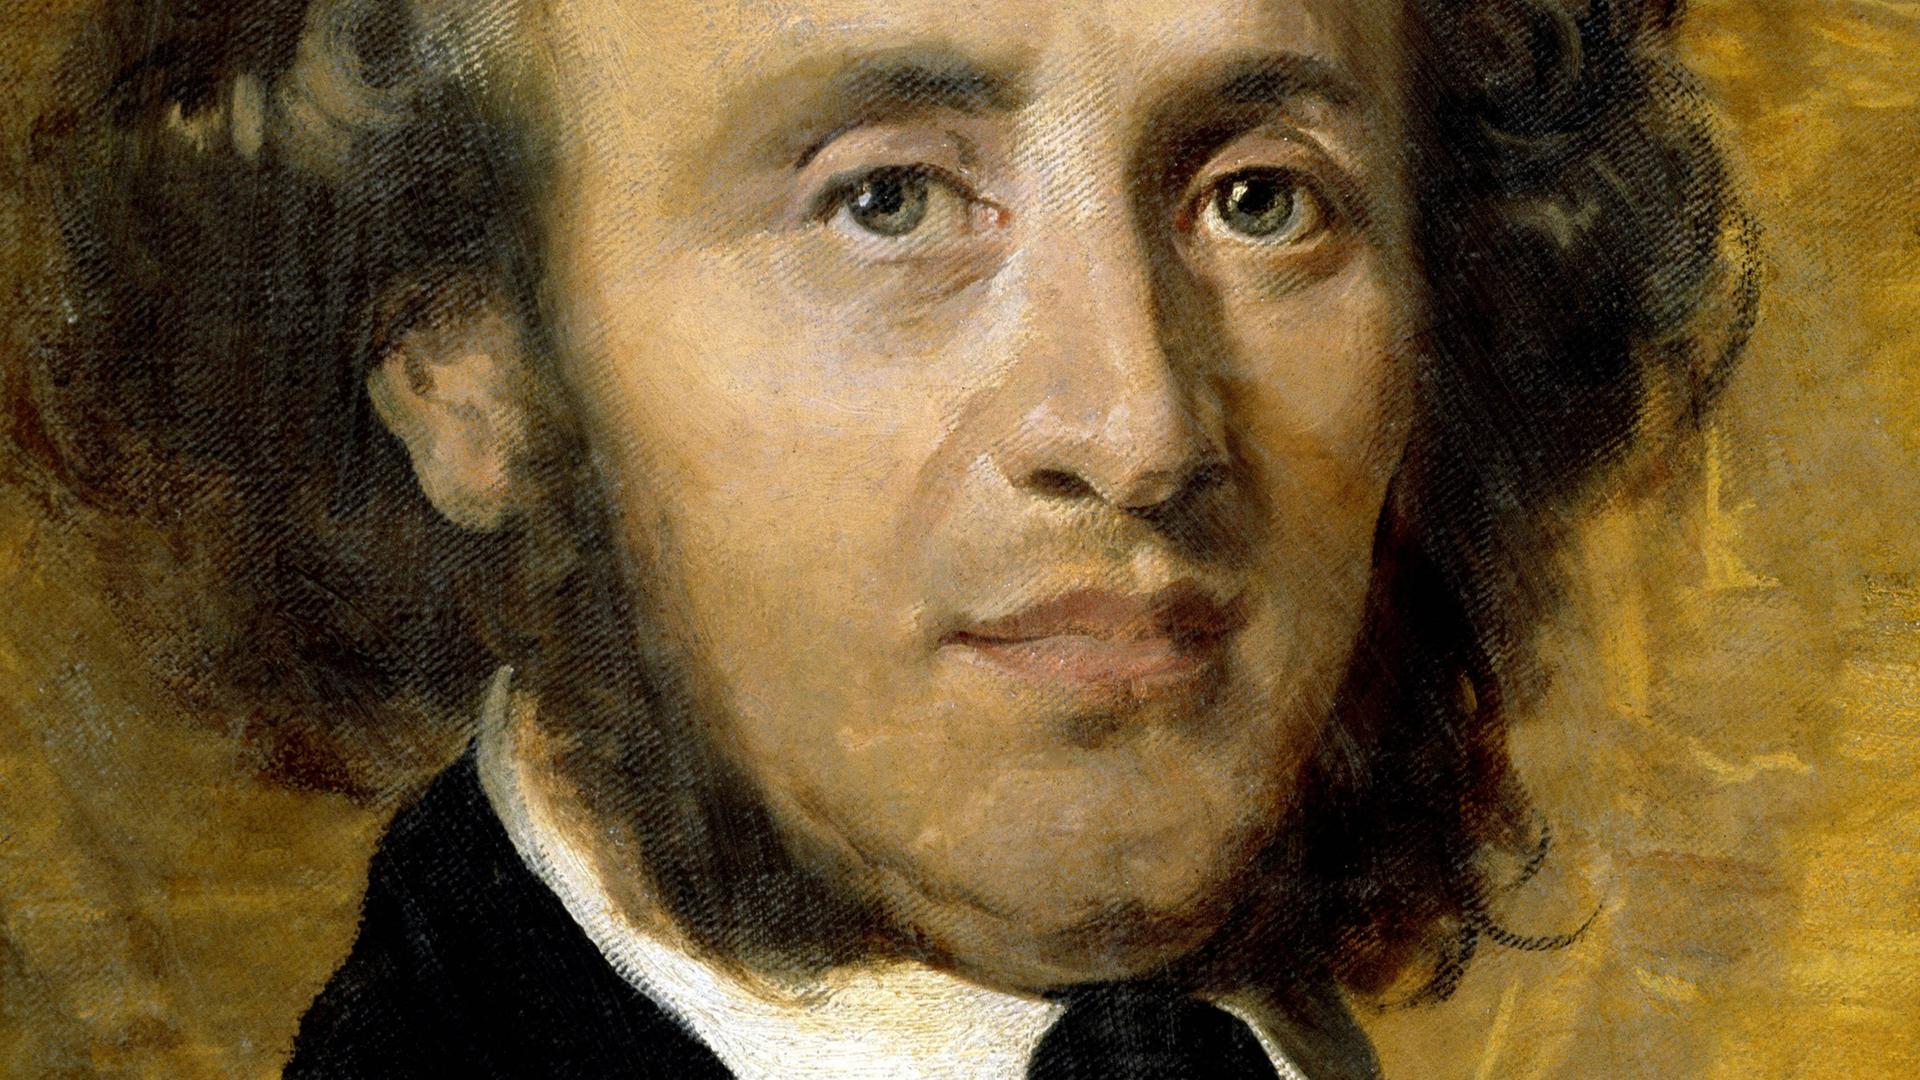 Anonyme Porträtmalerei von Felix Mendelssohn Bartholdy (1809 -1847).